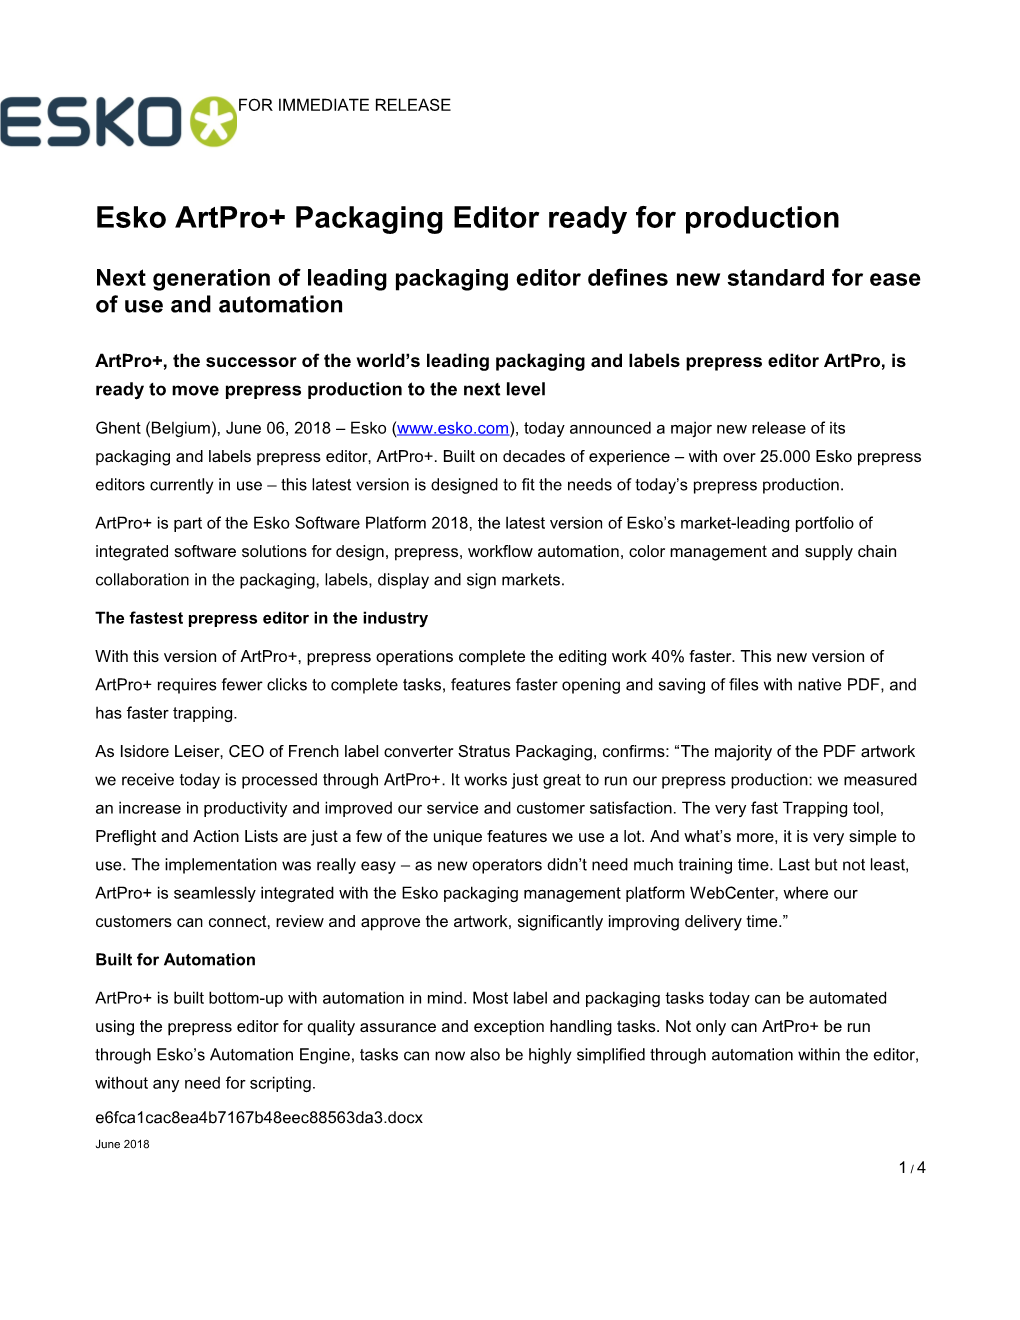 Esko Artpro+ Packaging Editor Ready for Production